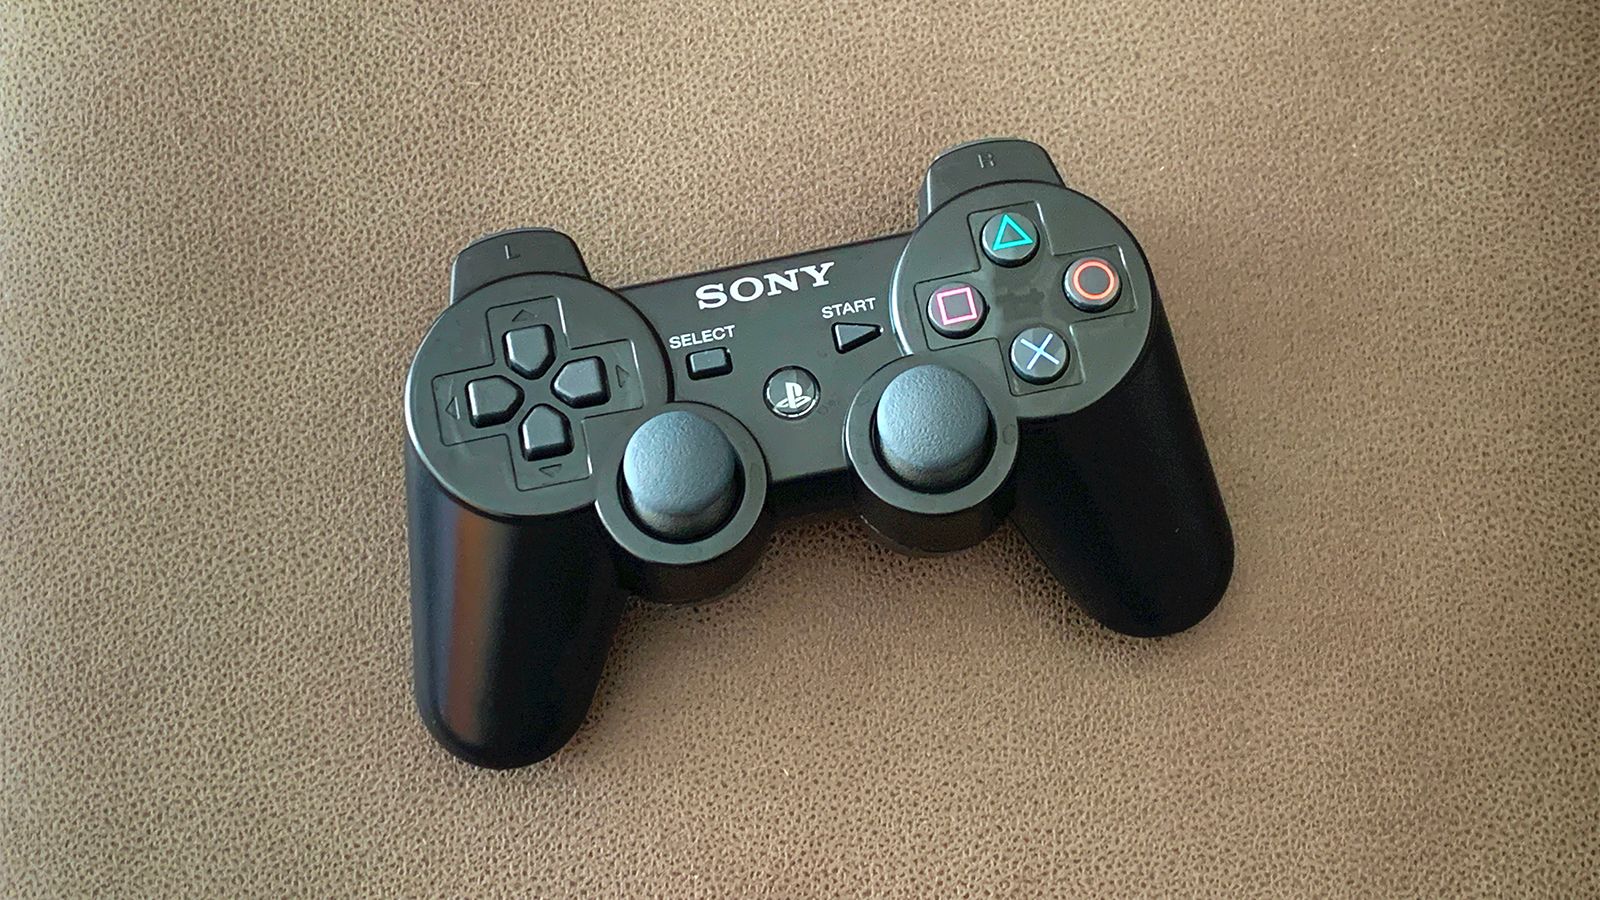 PlayStation 3 DualShock 3 controller.